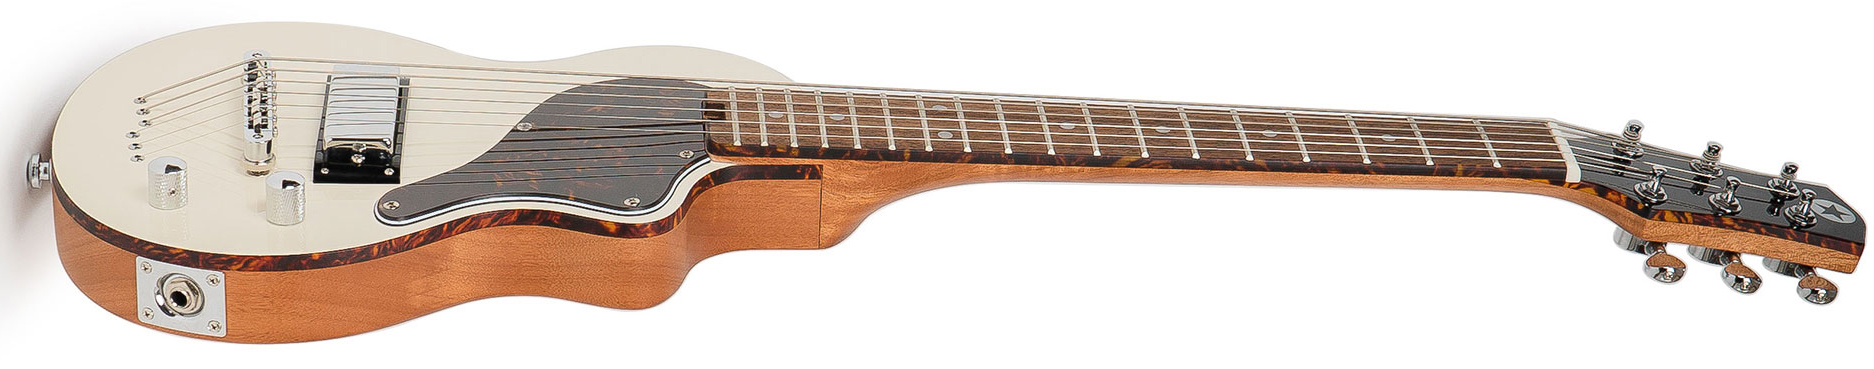 Blackstar Carry-on Travel Guitar Standard Pack +amplug2 Fly +housse - White - Elektrische gitaar set - Variation 2